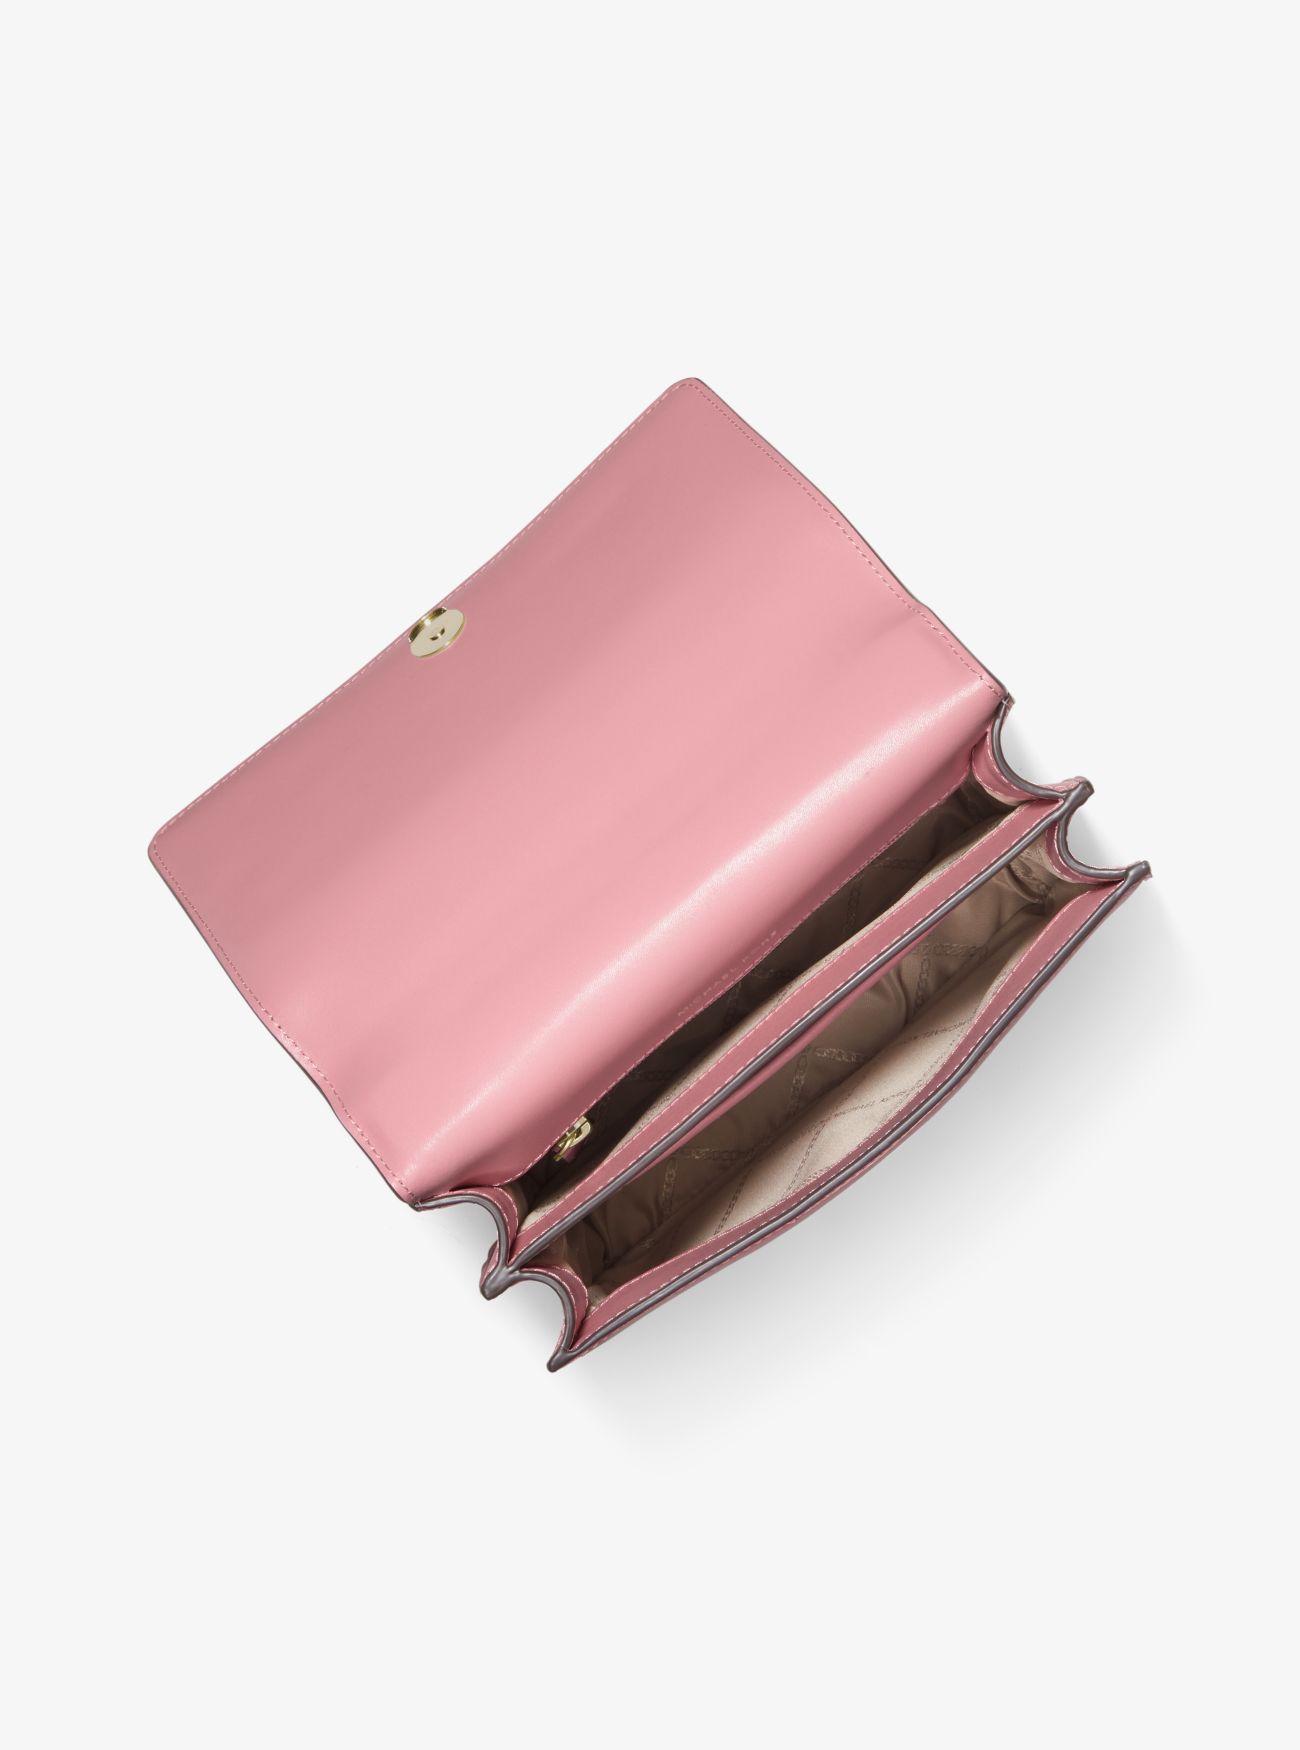 Michael Kors Mott Large Embellished Leather Crossbody Bag in Pink - Lyst